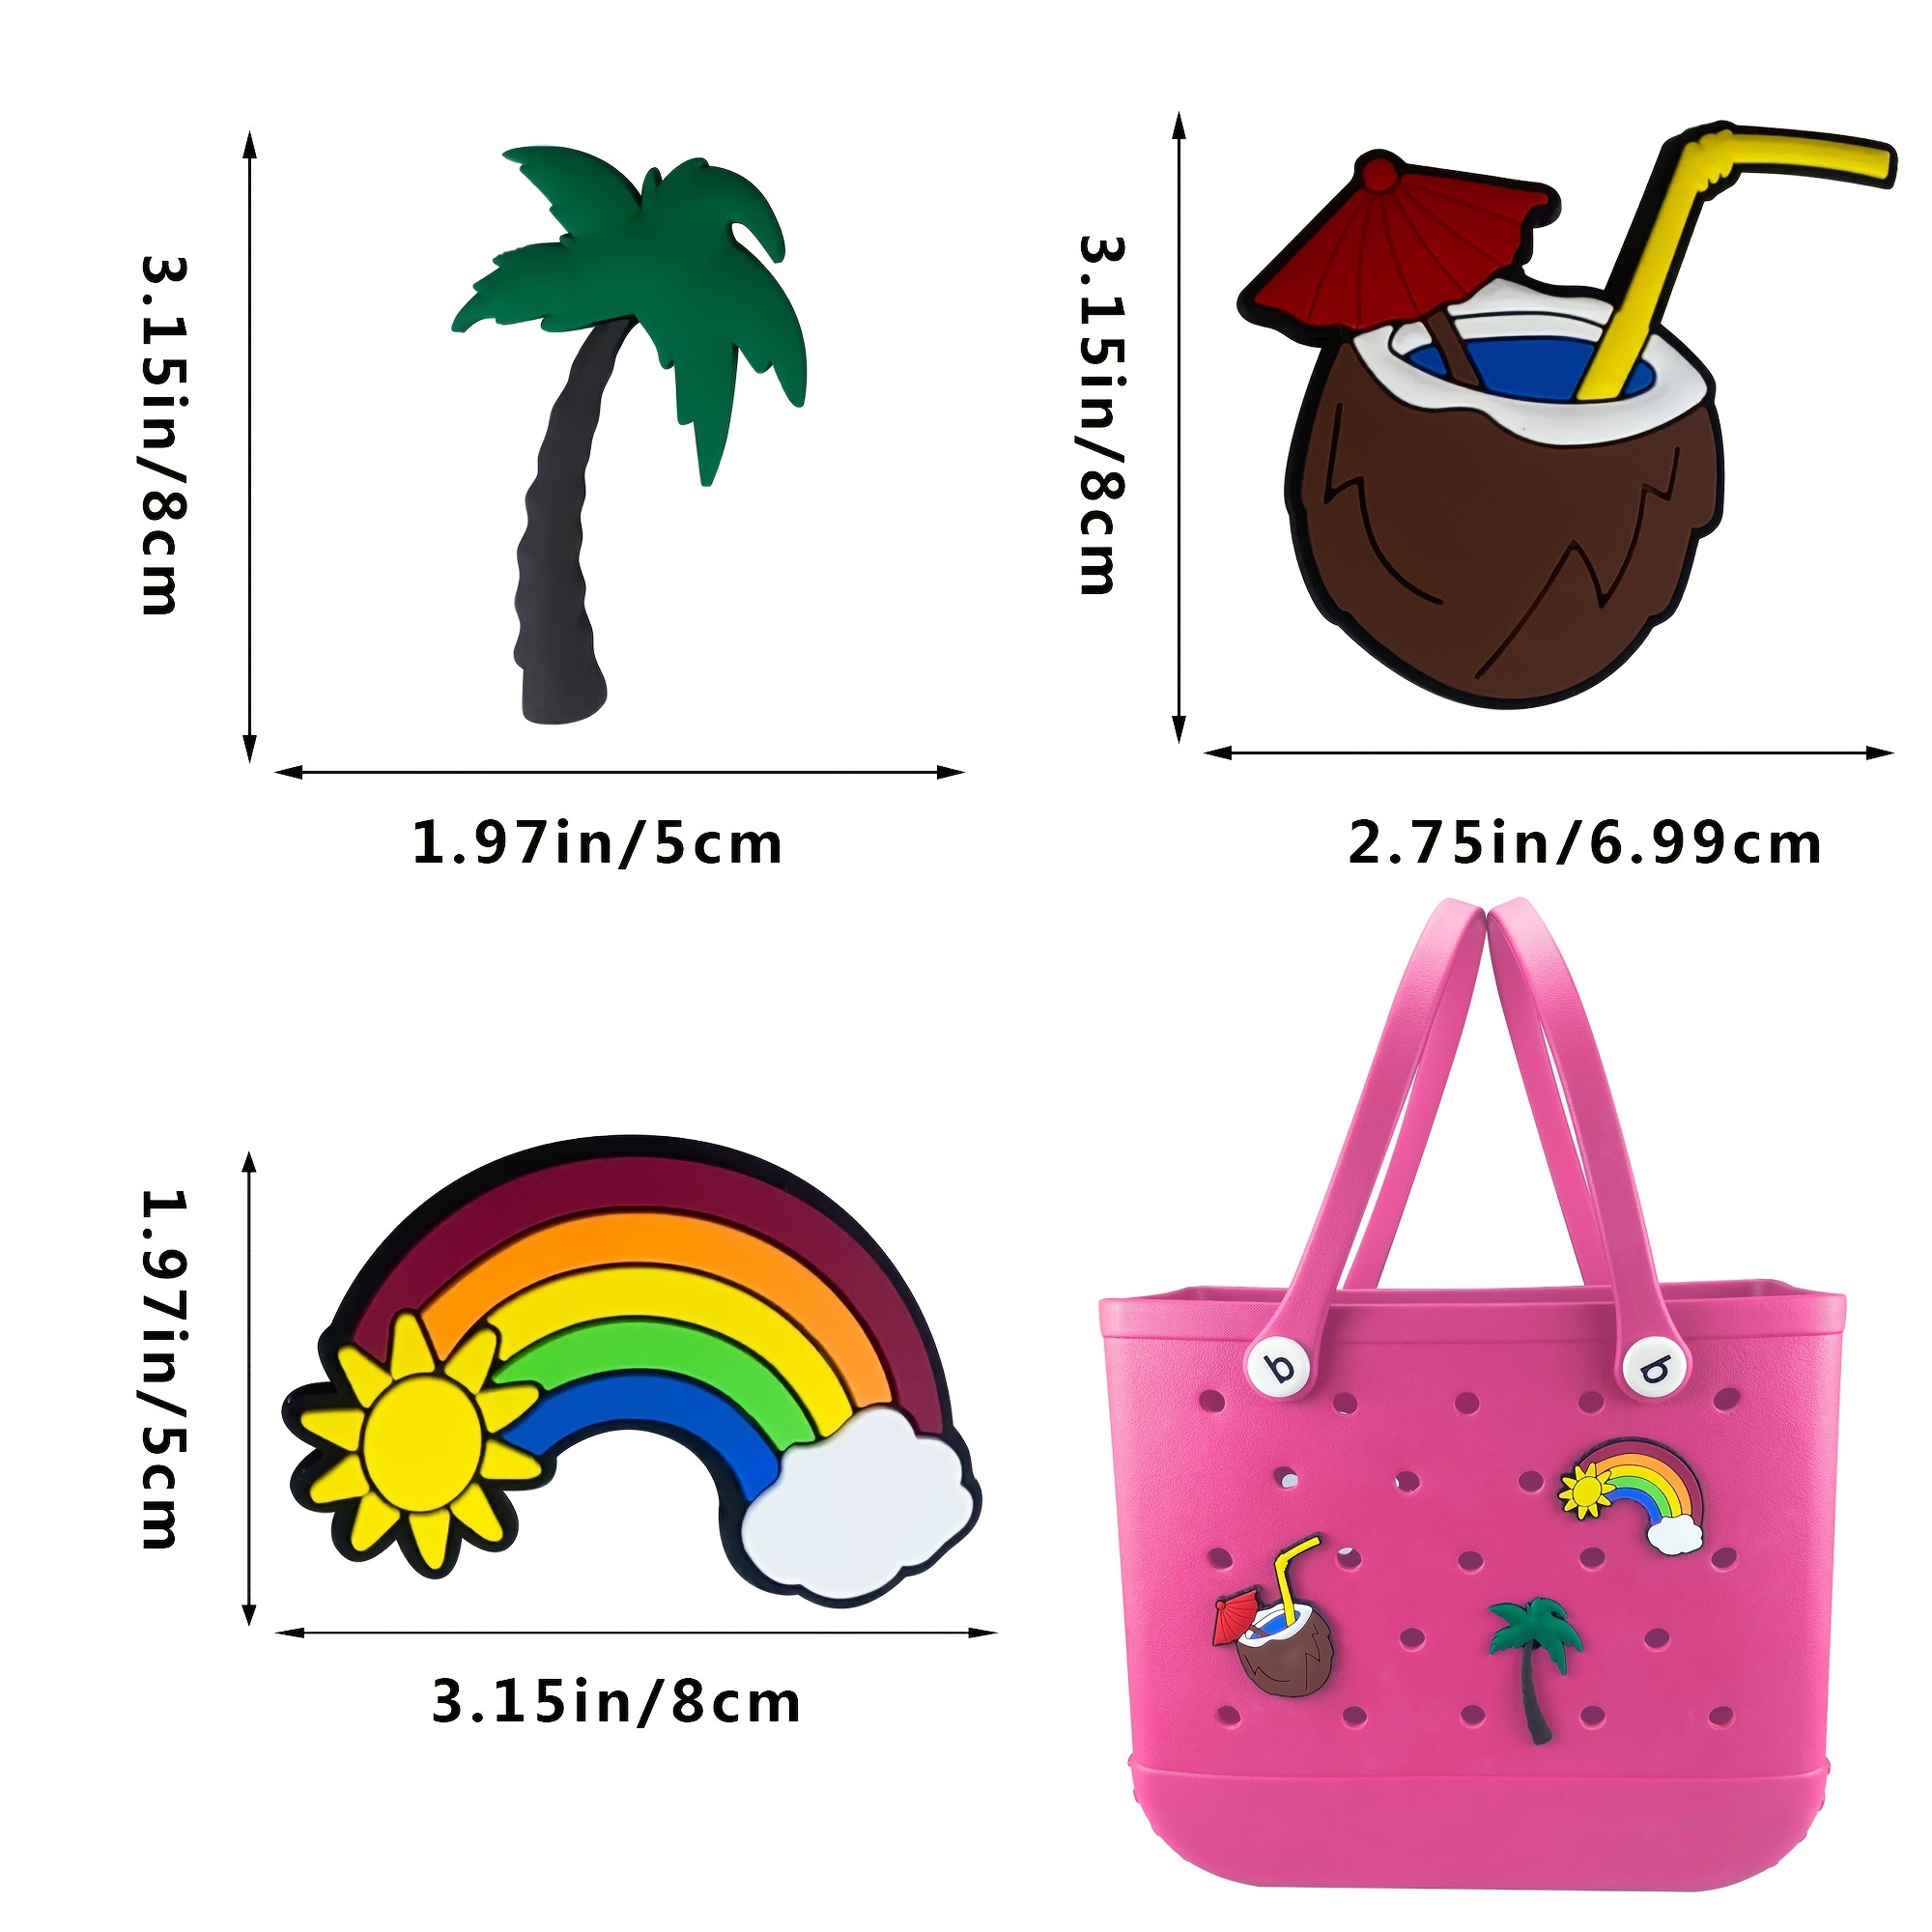 Bogg bag accessories  Bag accessories diy, Bag accessories, Bags